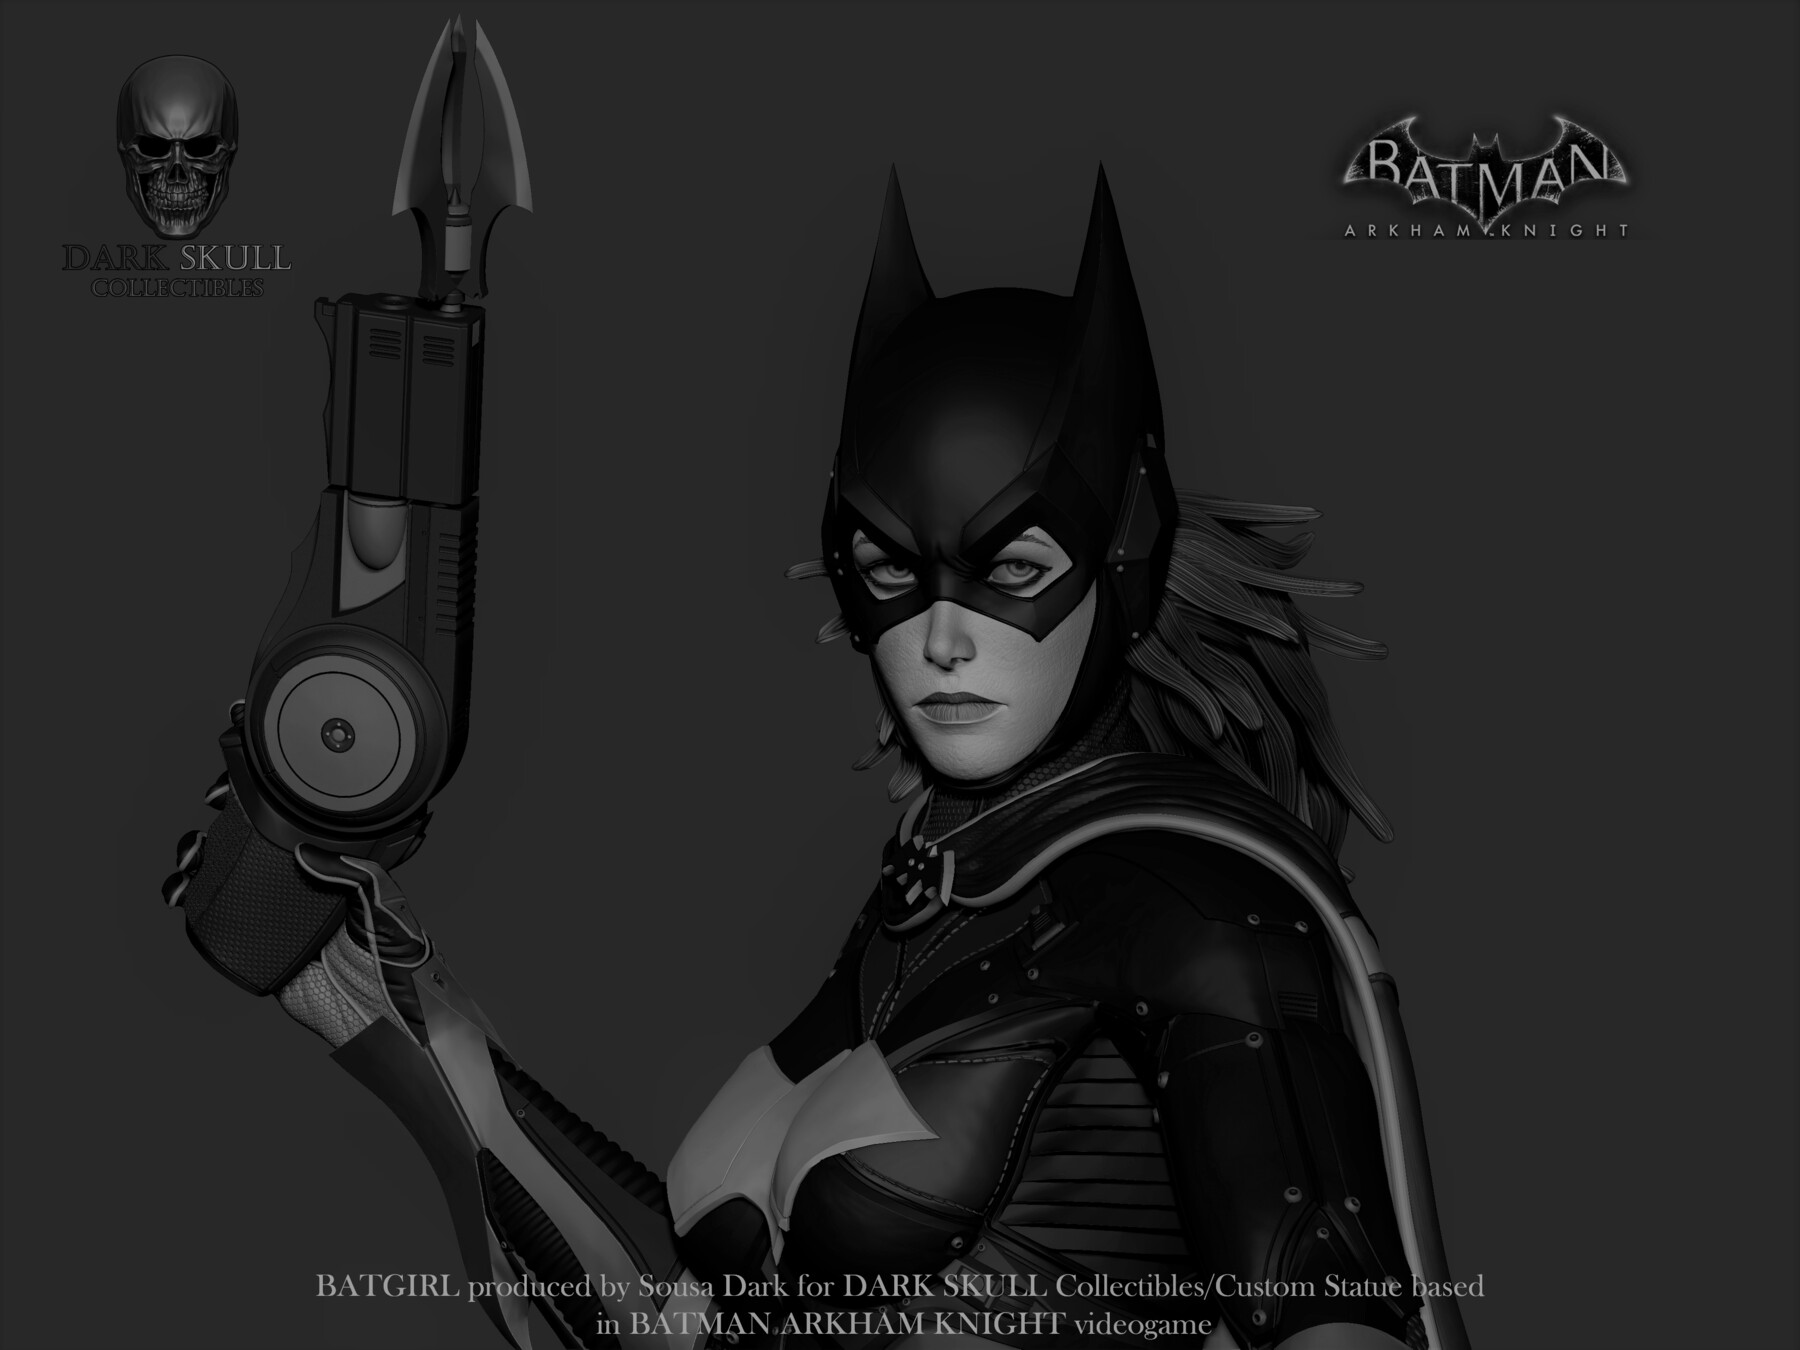 Batman™: Arkham Knight - A Matter of Family on Steam